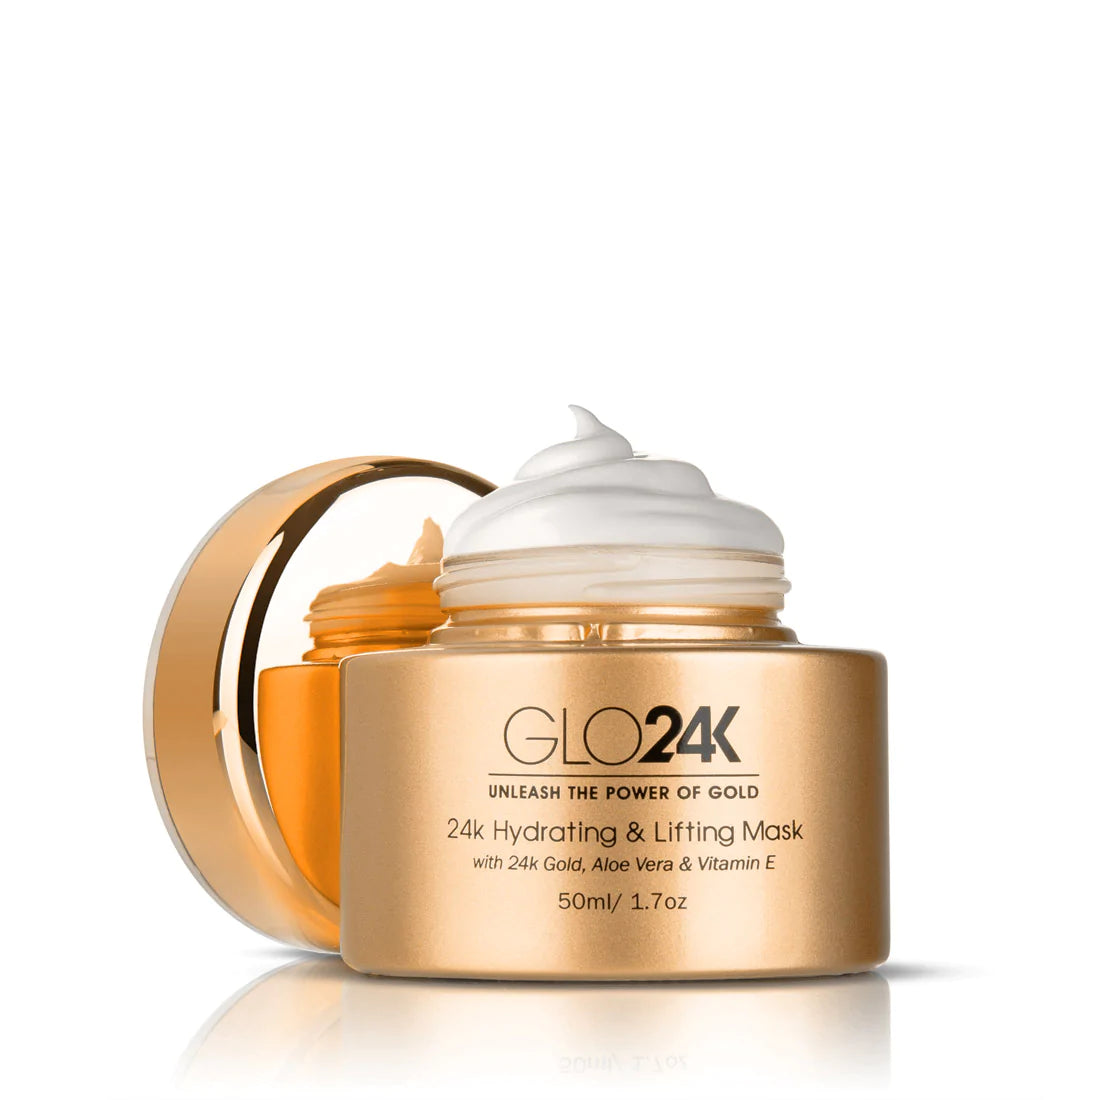 GLO24K 24k Hydrating & Lifting Mask with 24k Gold, Aloe Vera & Vitamin E, open jar